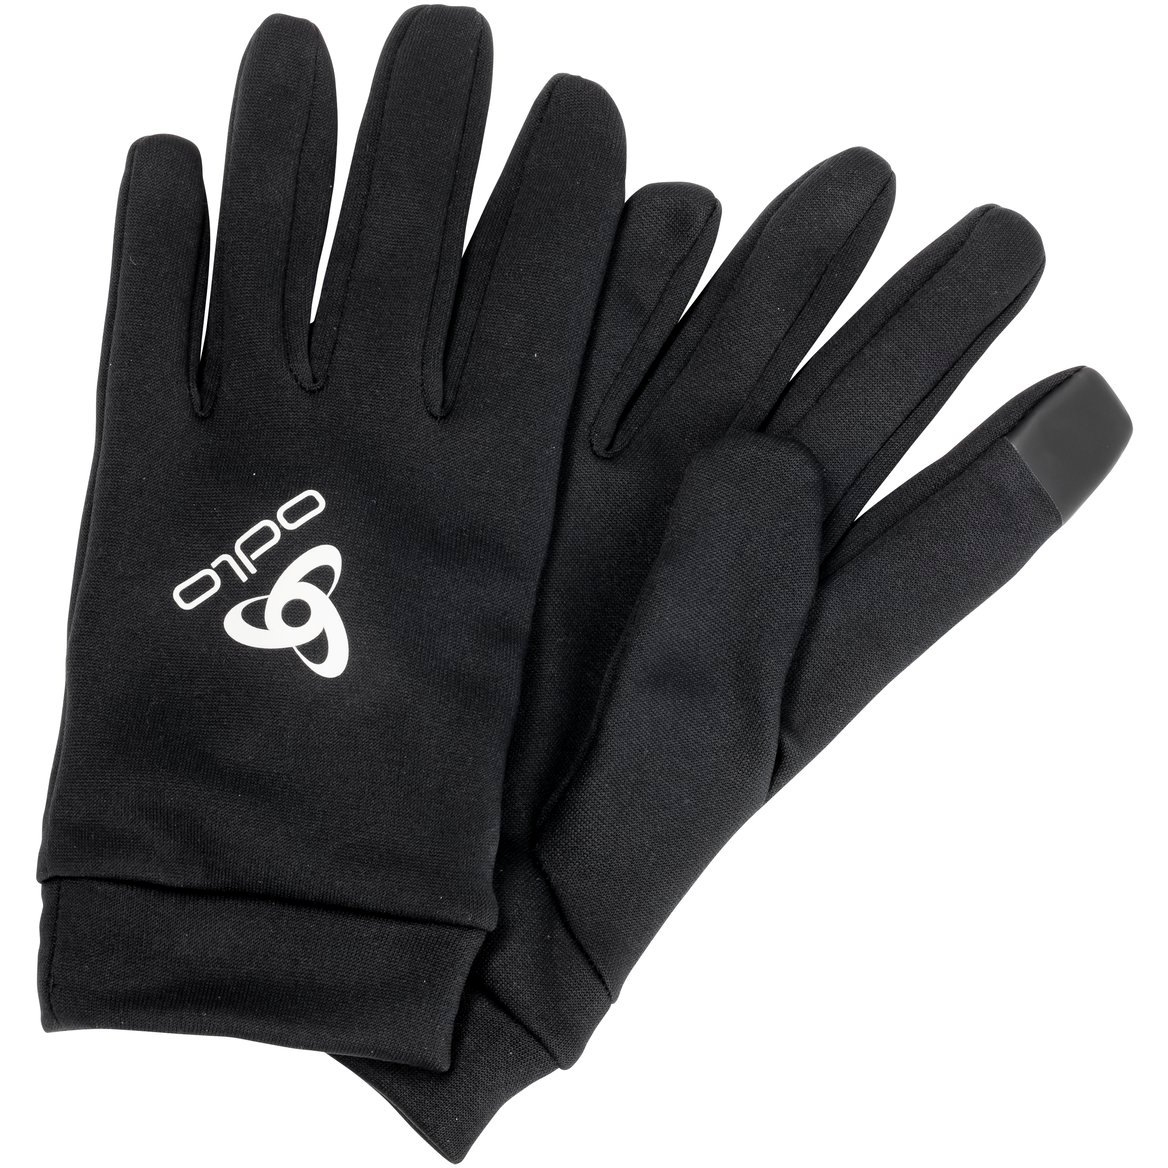 Produktbild von Odlo Stretchfleece Liner Eco E-Tip Handschuhe - schwarz